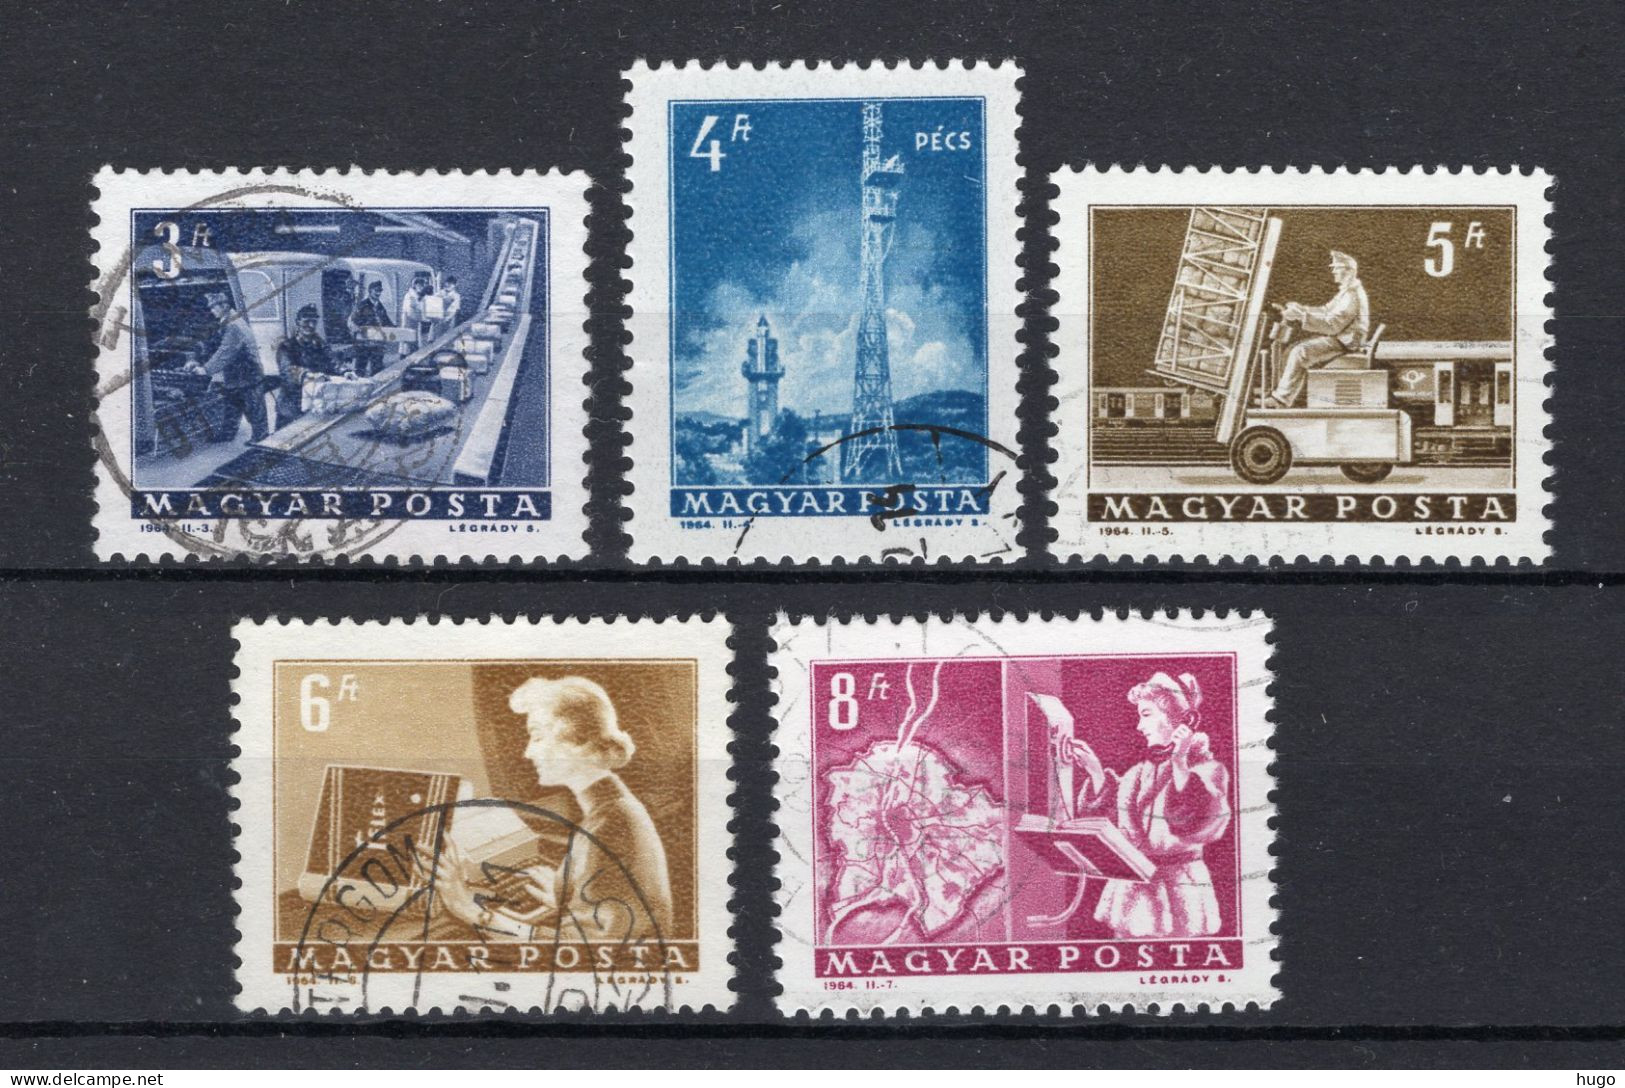 HONGARIJE Yt. 1571/1575° Gestempeld 1963-1972 - Used Stamps